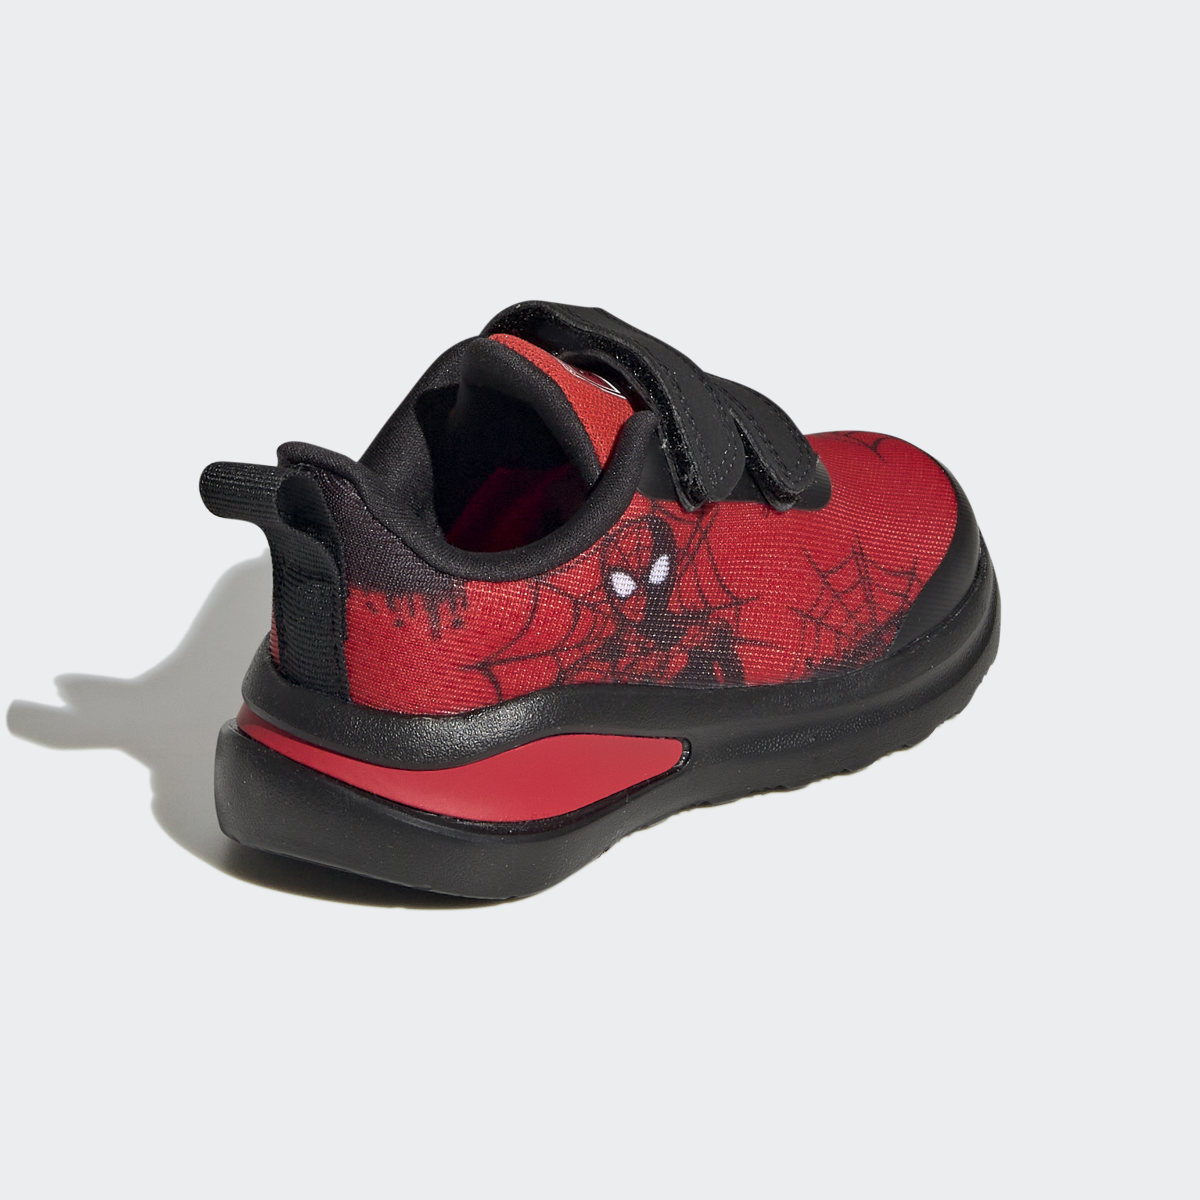 Adidas Sapatilhas Fortarun Spider-Man adidas x Marvel. 6